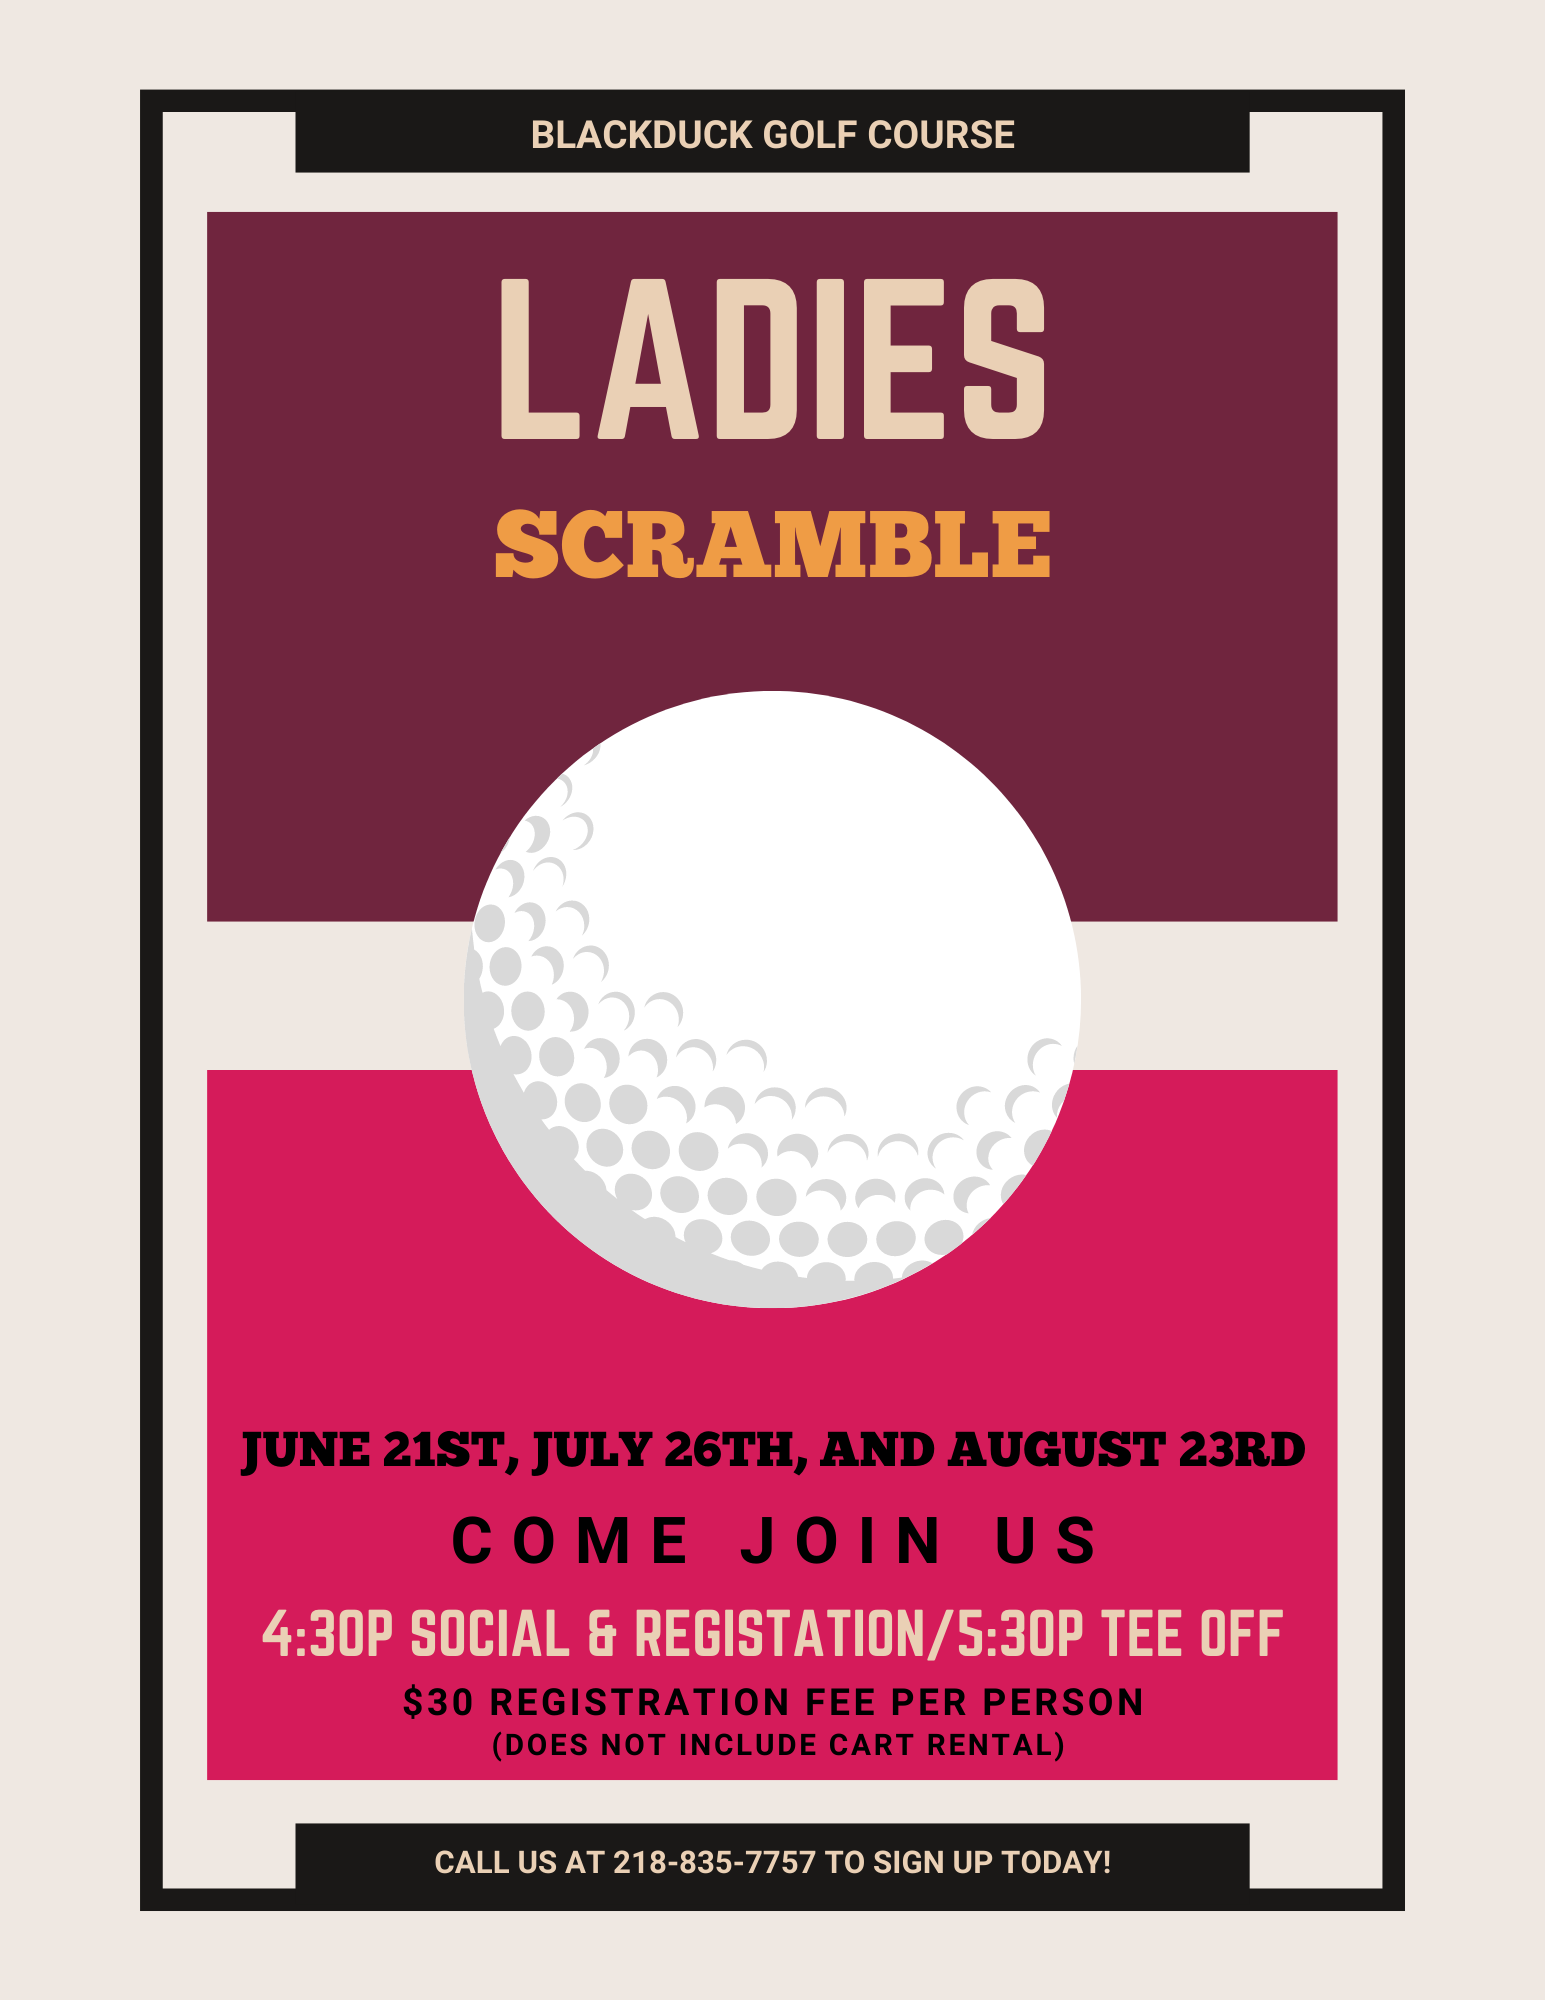 Ladies Scramble flyer for Blackduck golf course